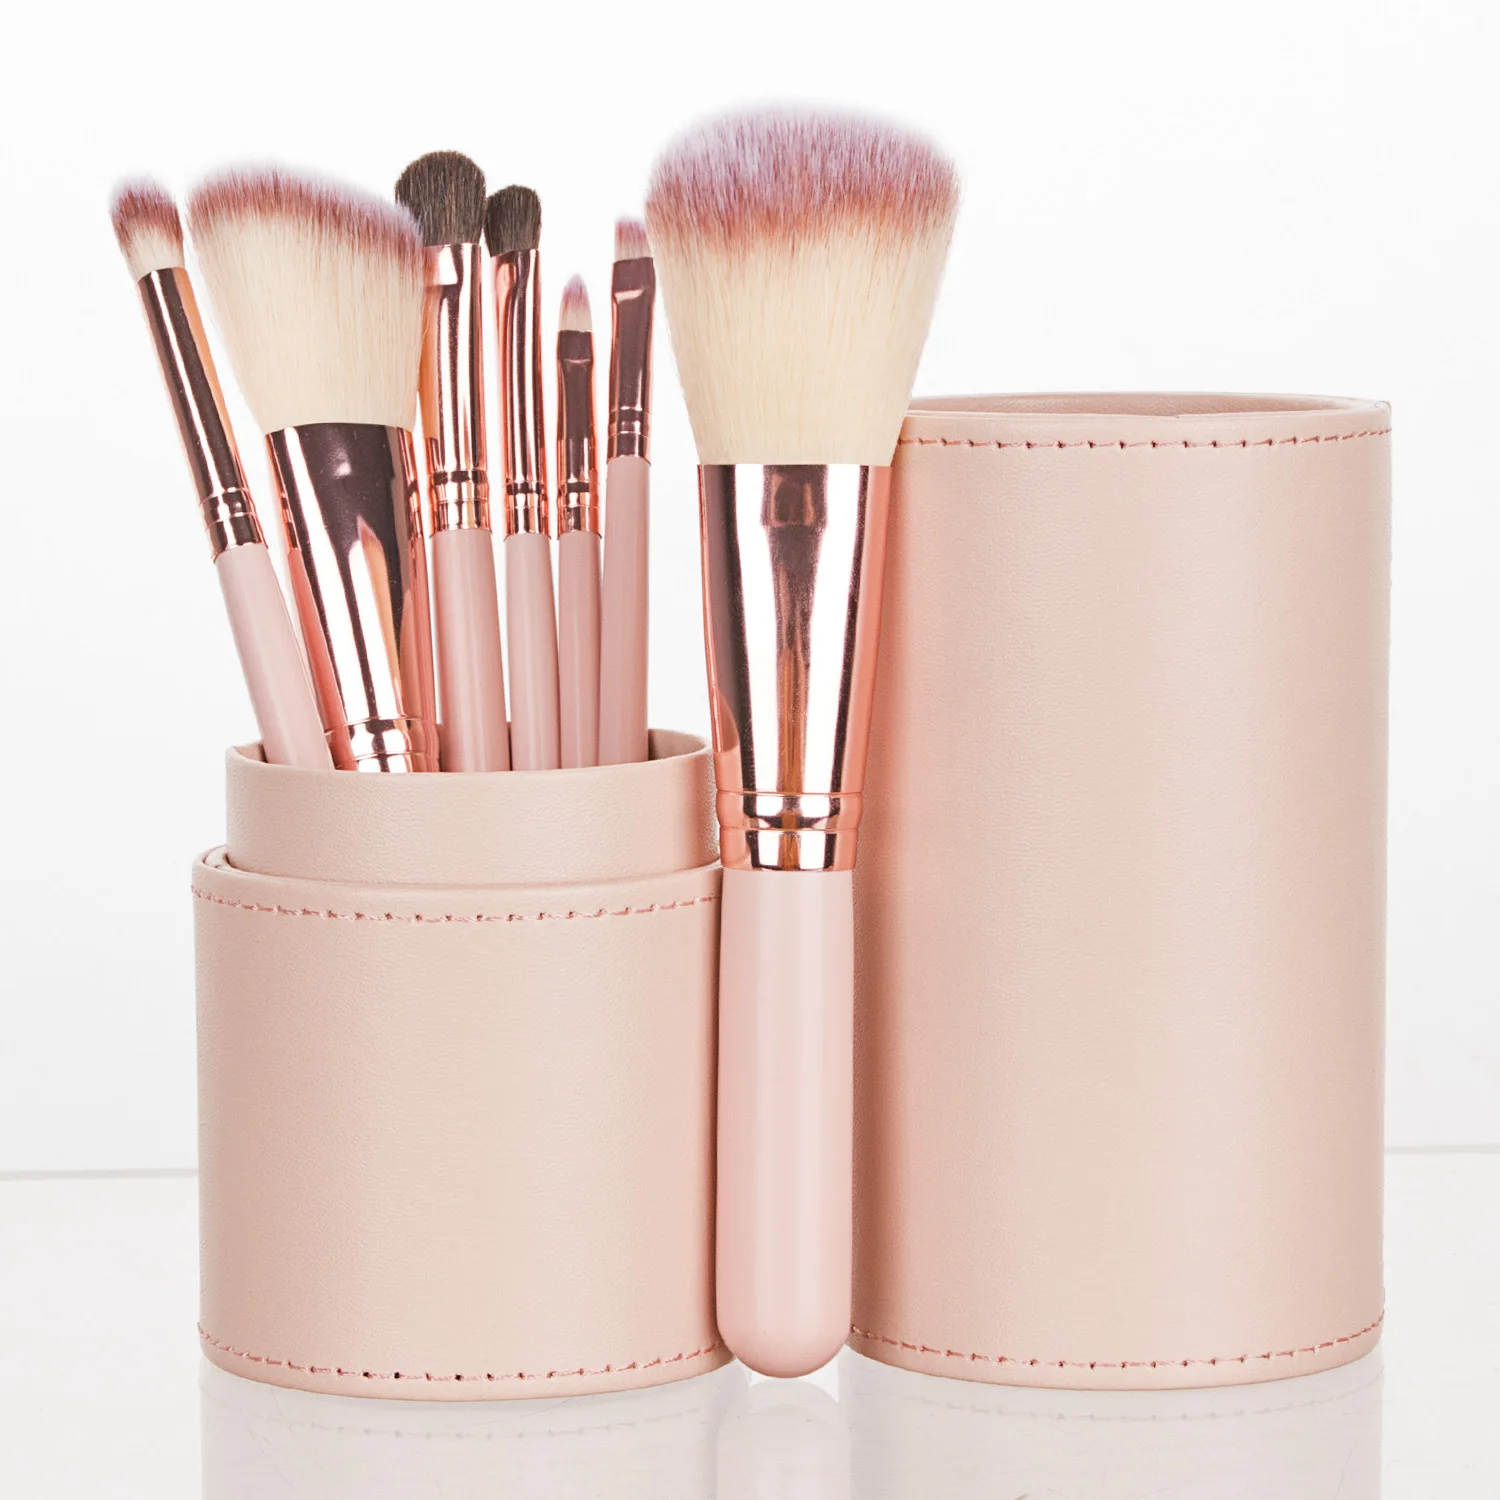 7pcs New Pink Professional Makeup Brushes Set with Bucket Blush Powder Eyeshadow Eyebrow Foundation Beauty Makeup Tool Brochas